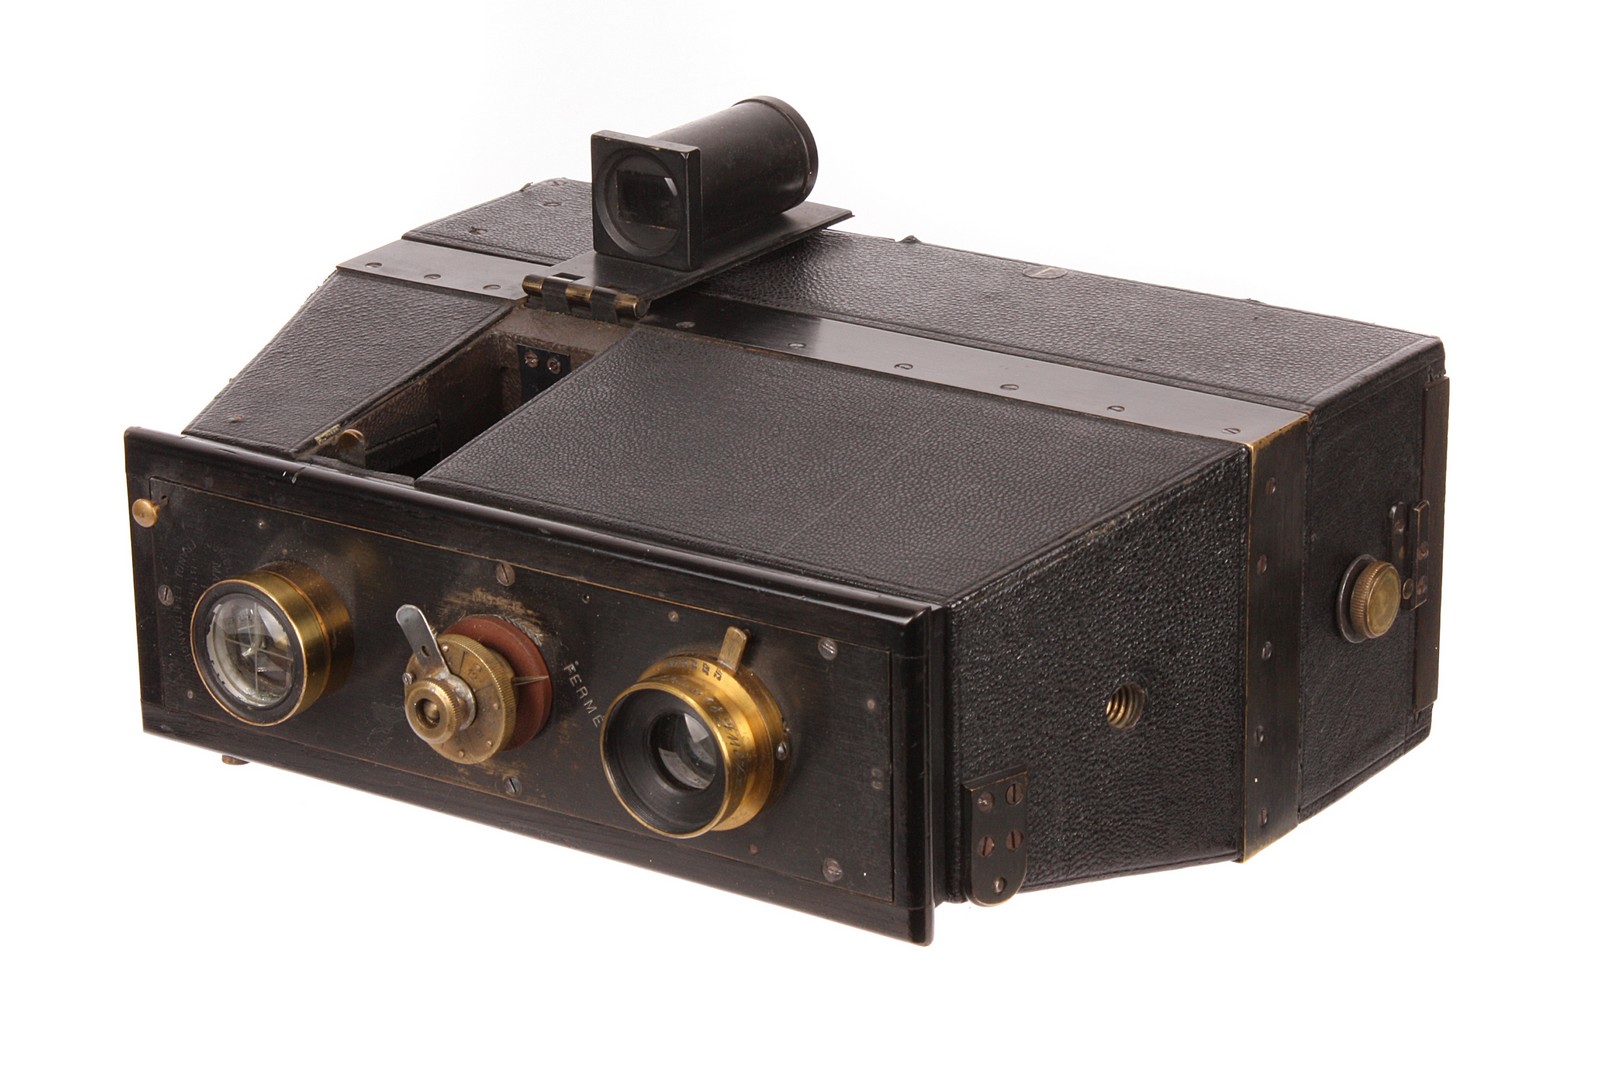 A Mackenstein Jumelle Photographique Camera, 2½x3½, with E. Krauss Anastigmat Zeiss f/8 110mm